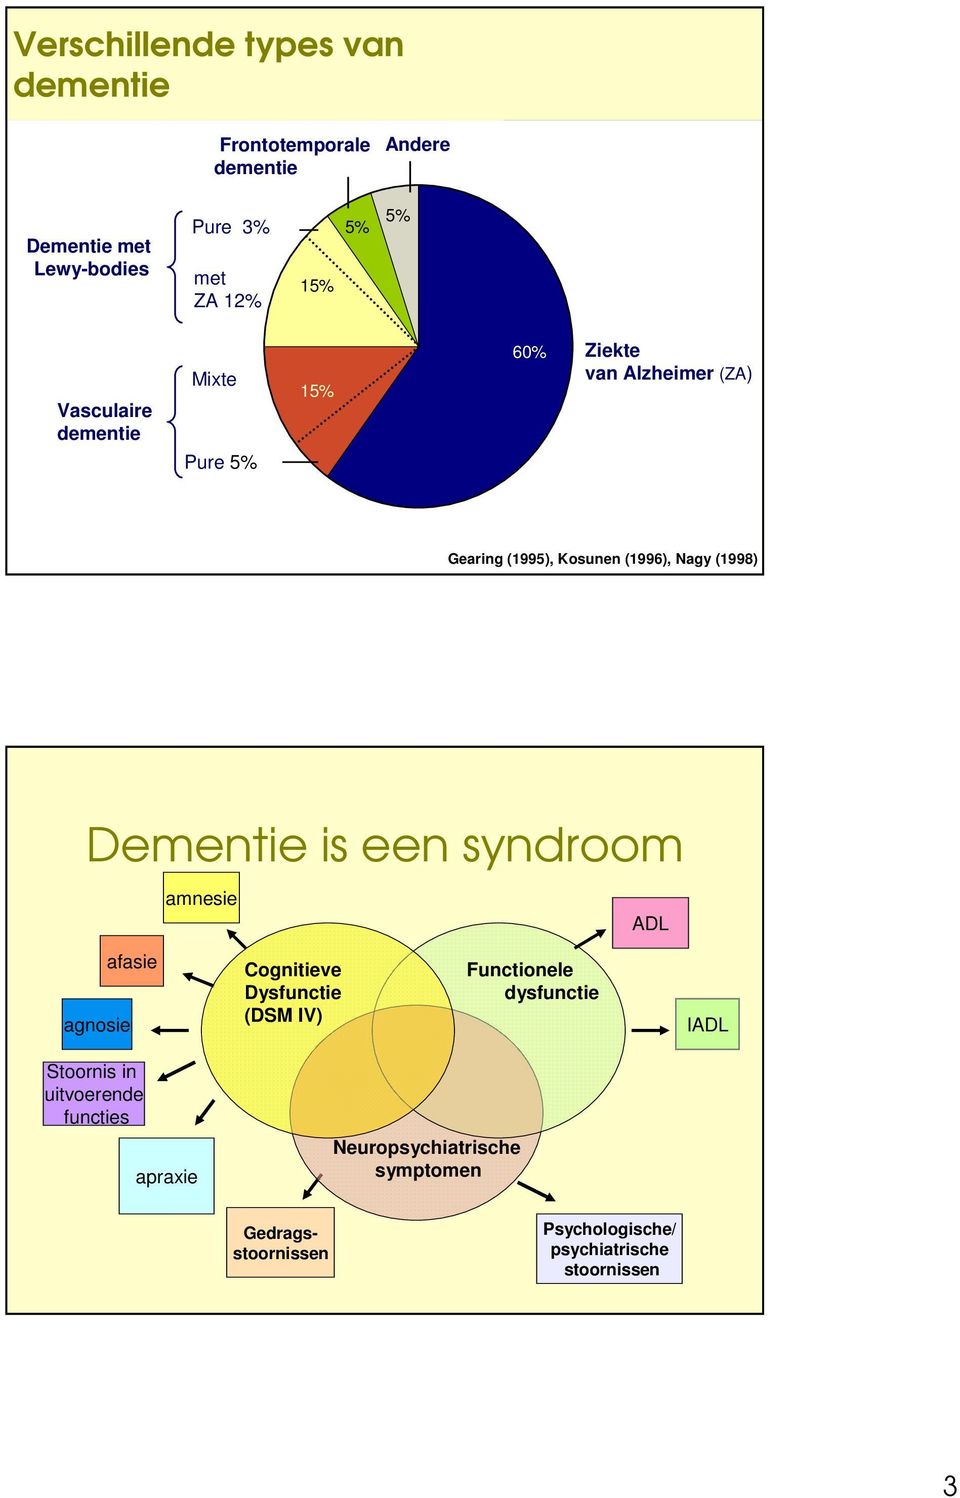 Dementie is een syndroom amnesie ADL agnosie afasie Cognitieve Dysfunctie (DSM IV) Functionele dysfunctie IADL